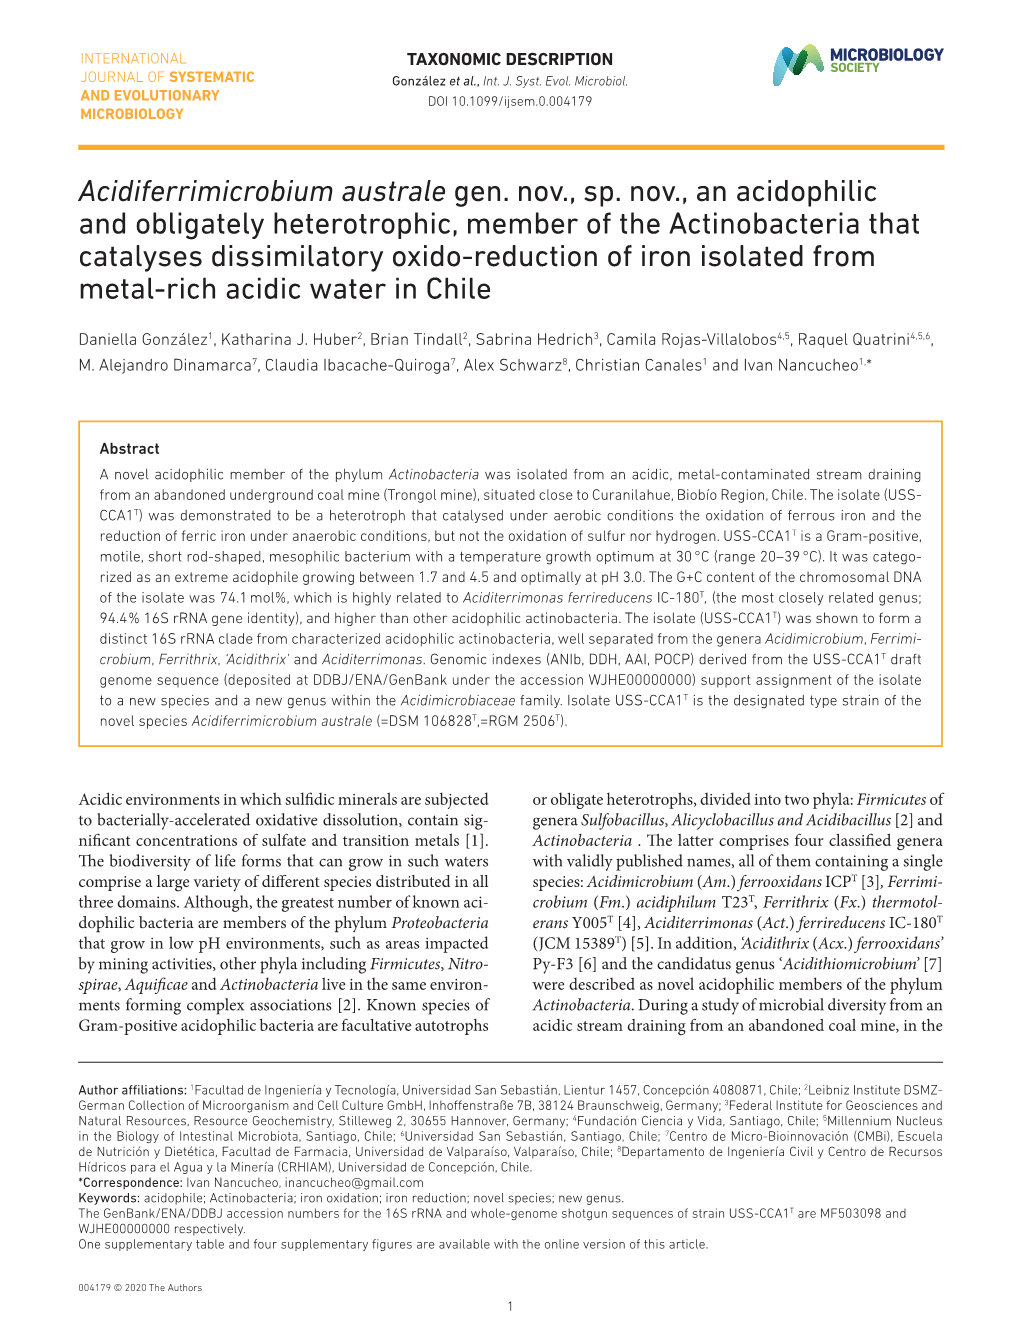 Acidiferrimicrobium Australe Gen. Nov., Sp. Nov., an Acidophilic and Obligately Heterotrophic, Member of the Actinobacteria That